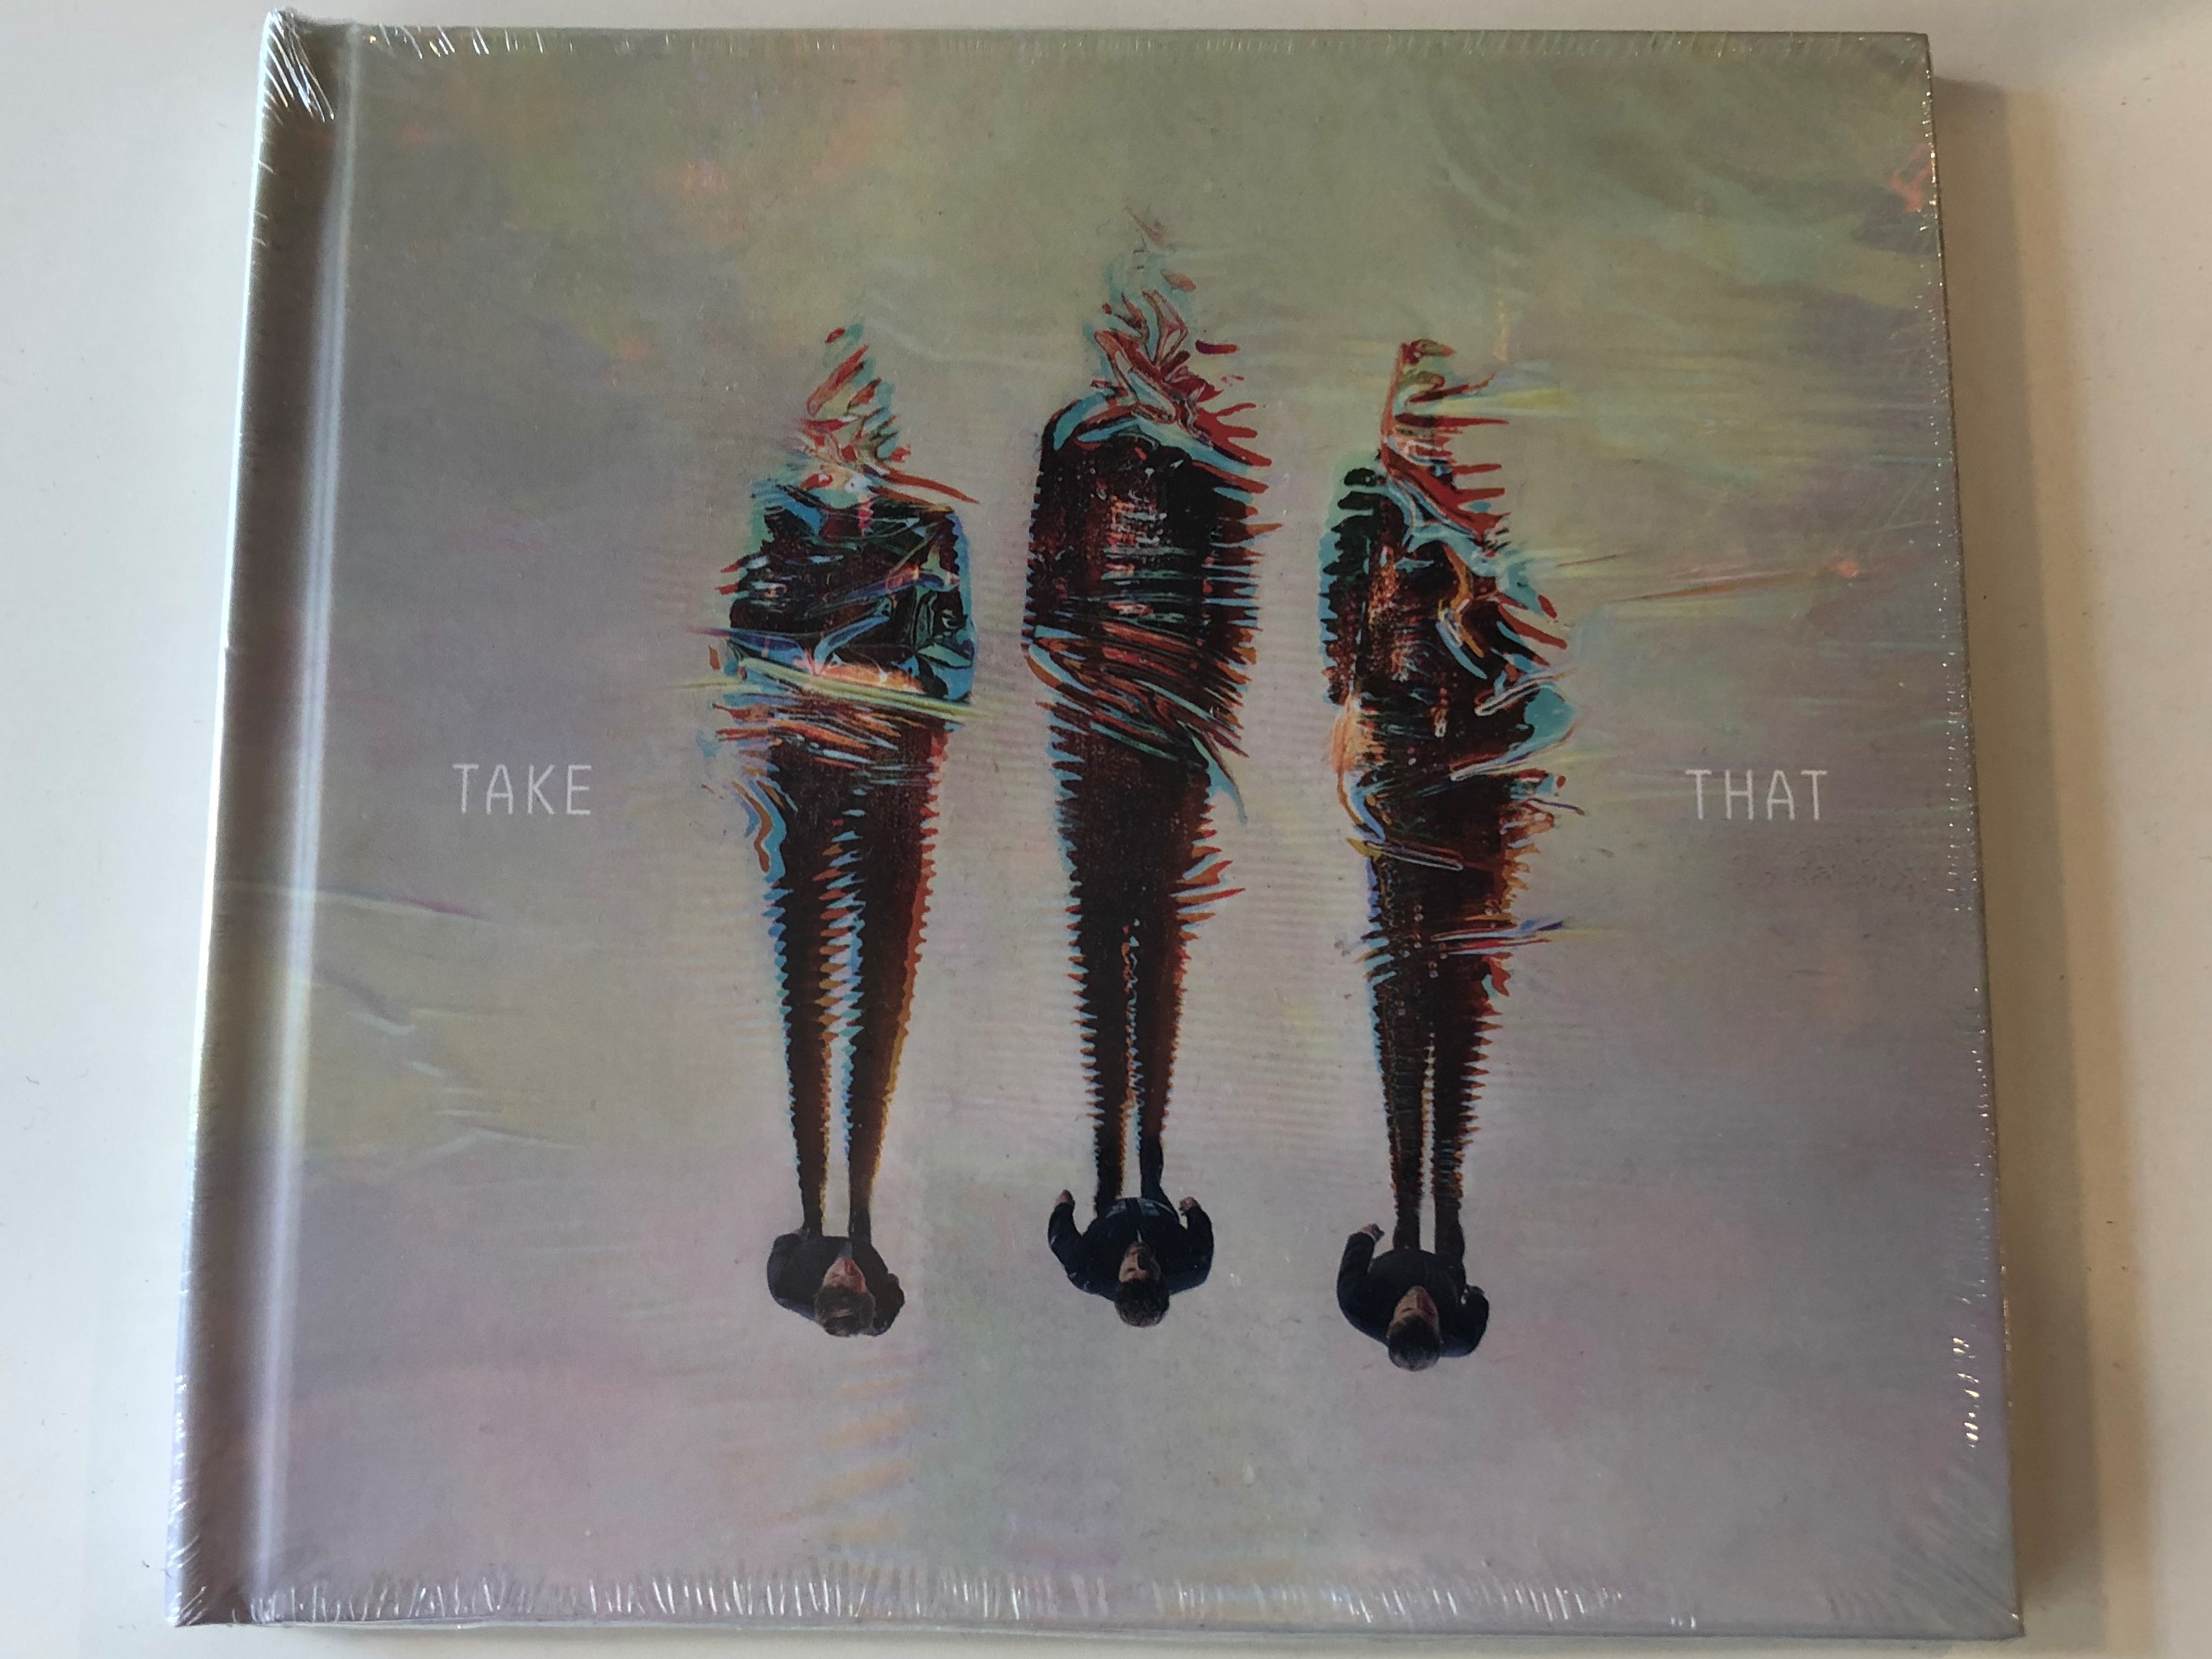 take-that-iii-polydor-audio-cd-2014-470-921-9-1-.jpg